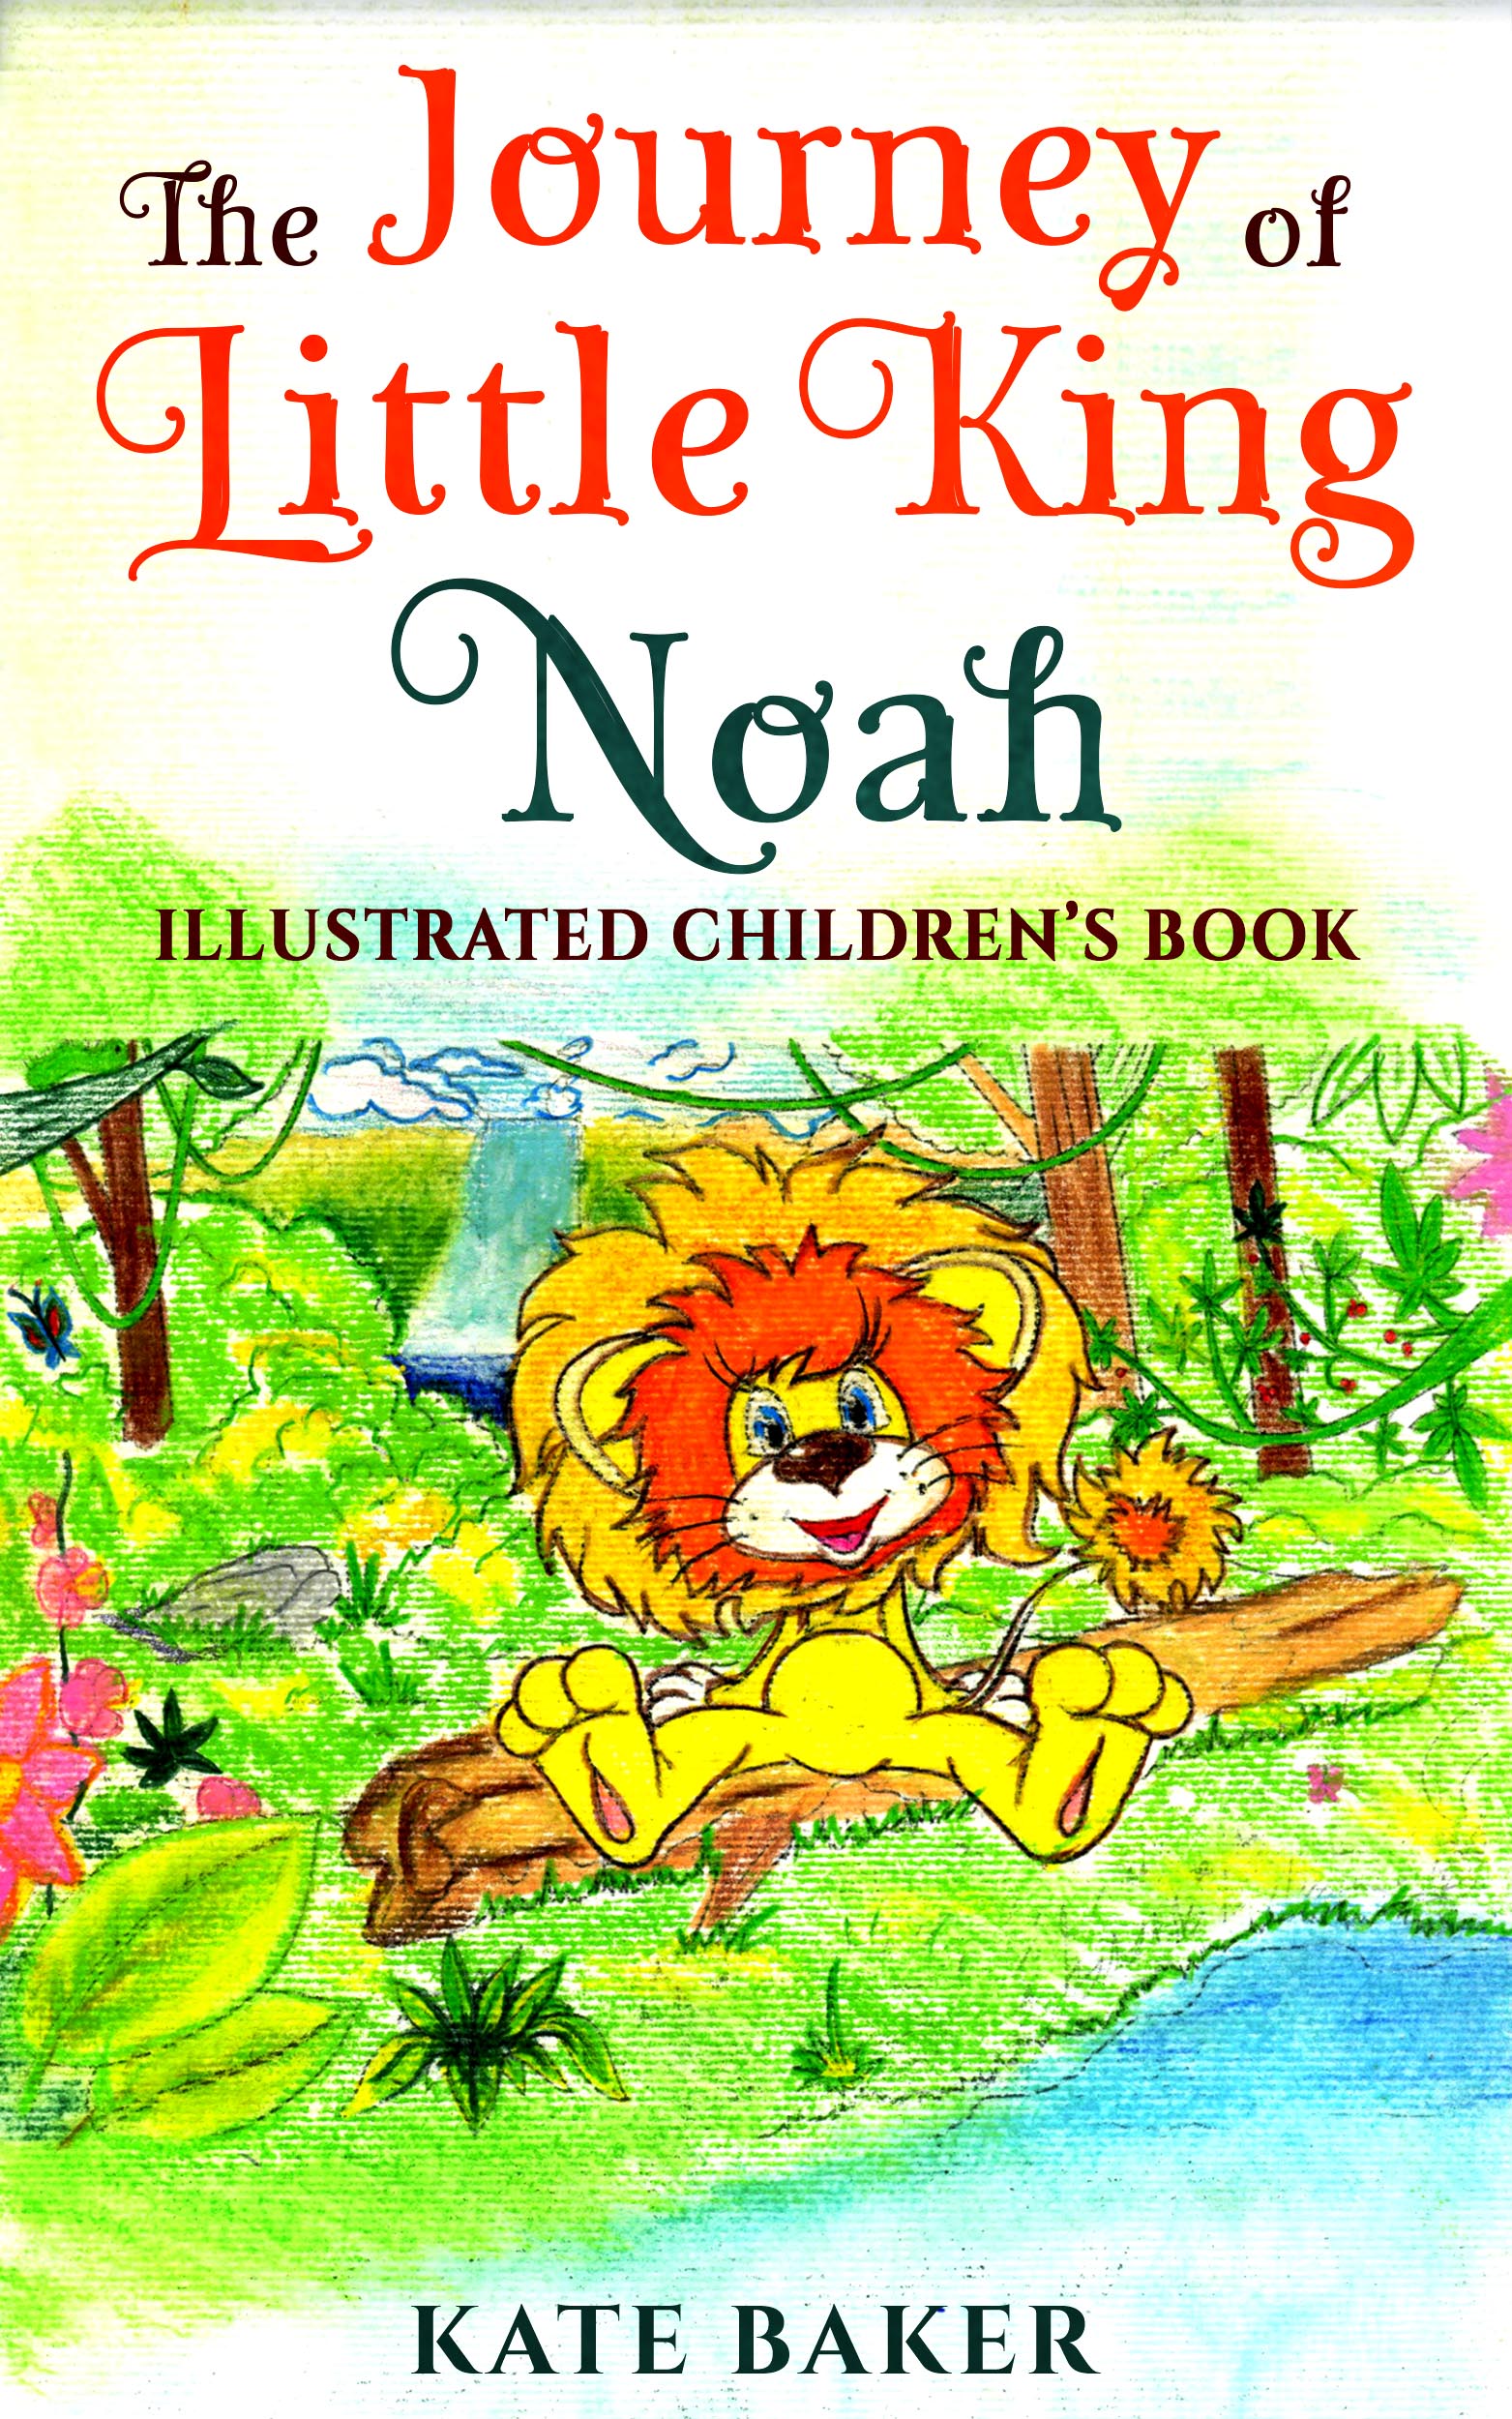 FREE: The Journey of Little King Noah by Kate Baker